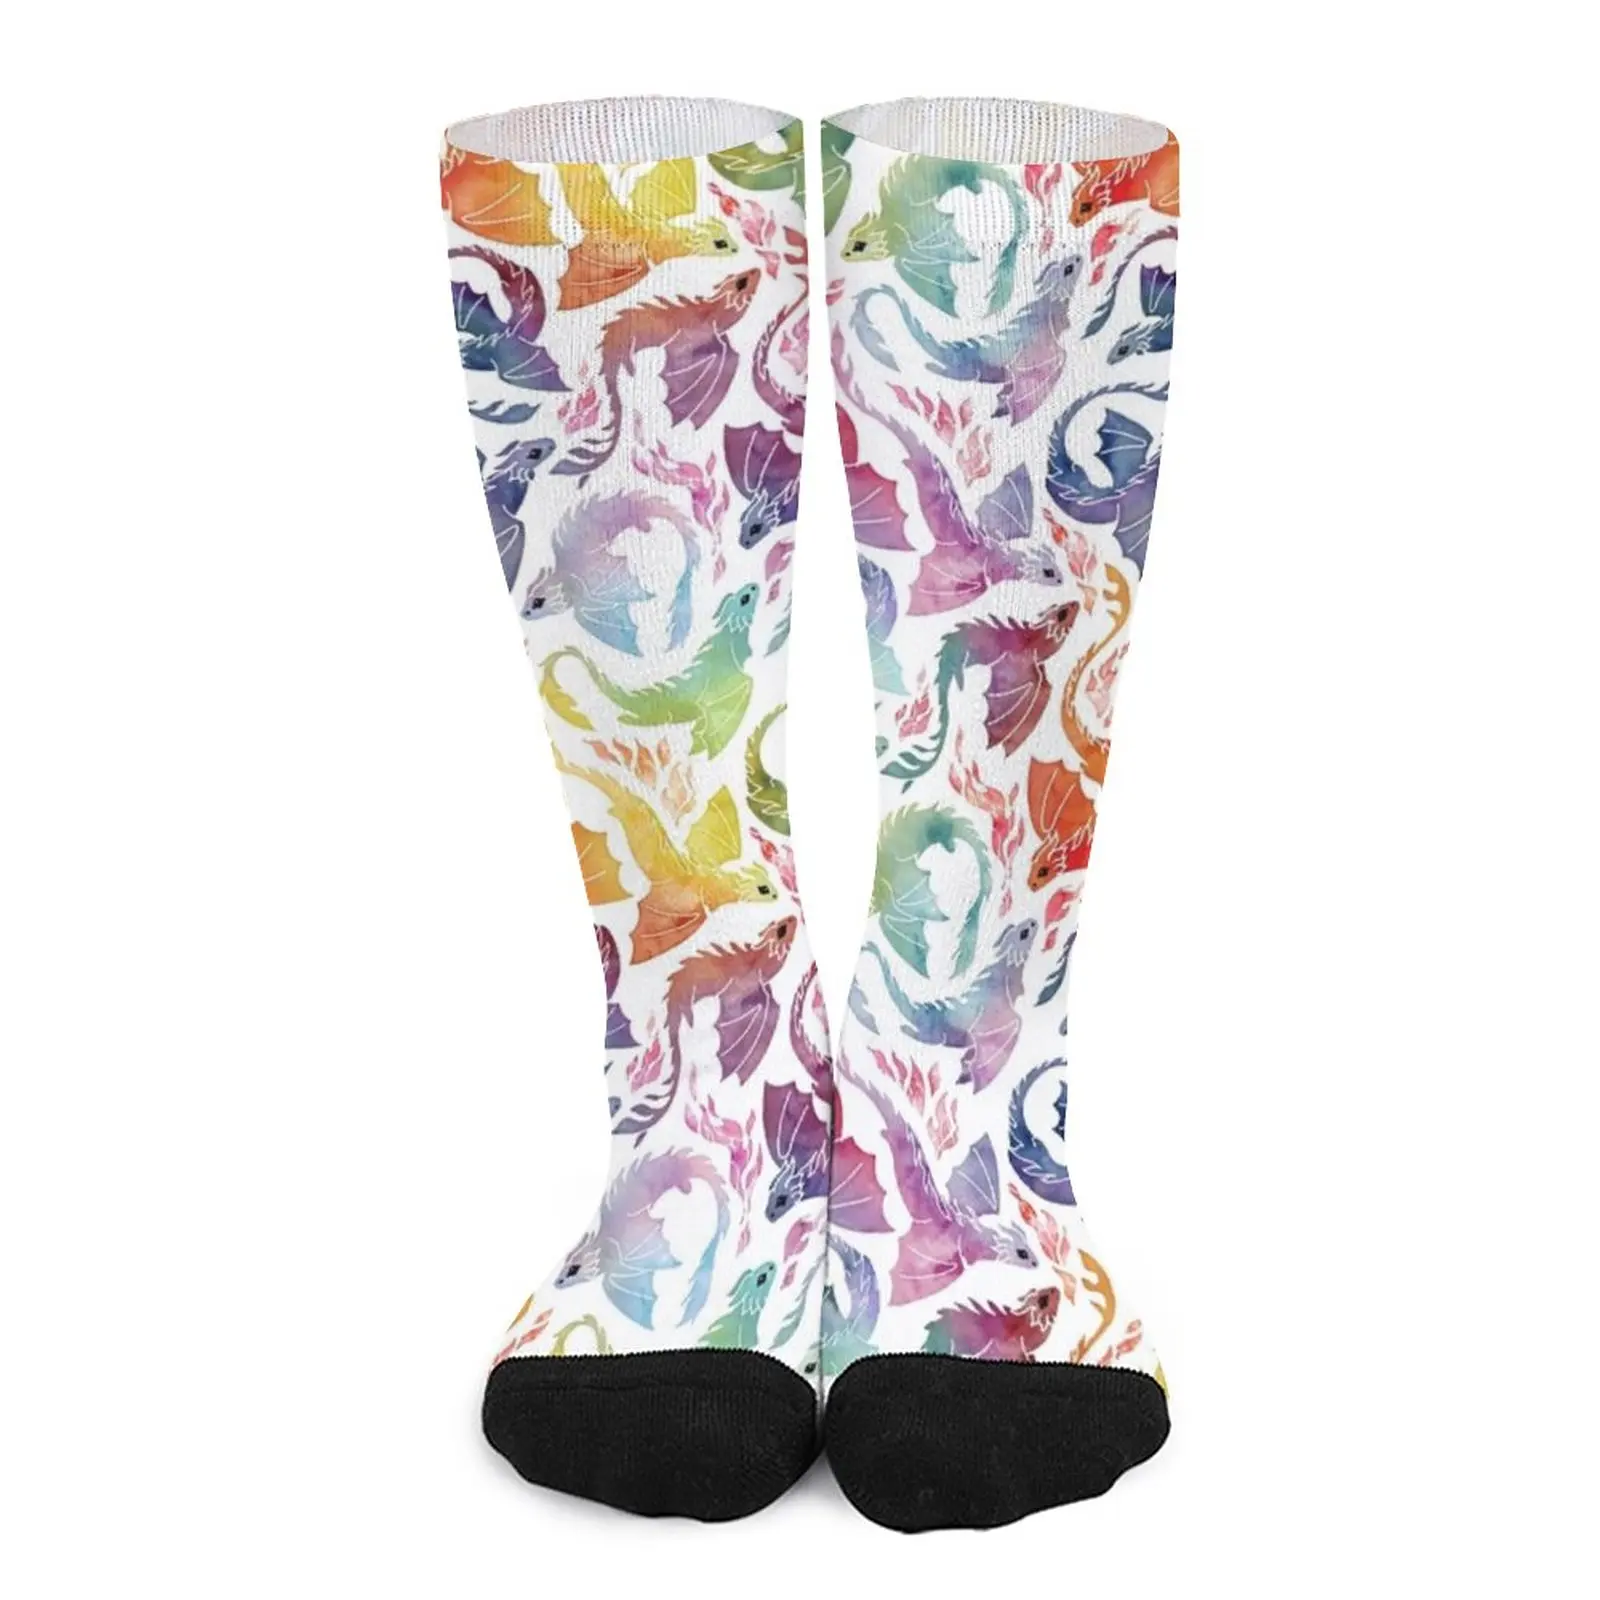 Dragon fire rainbow Socks custom socks funny socks for Women valentines day gift for boyfriend shoes